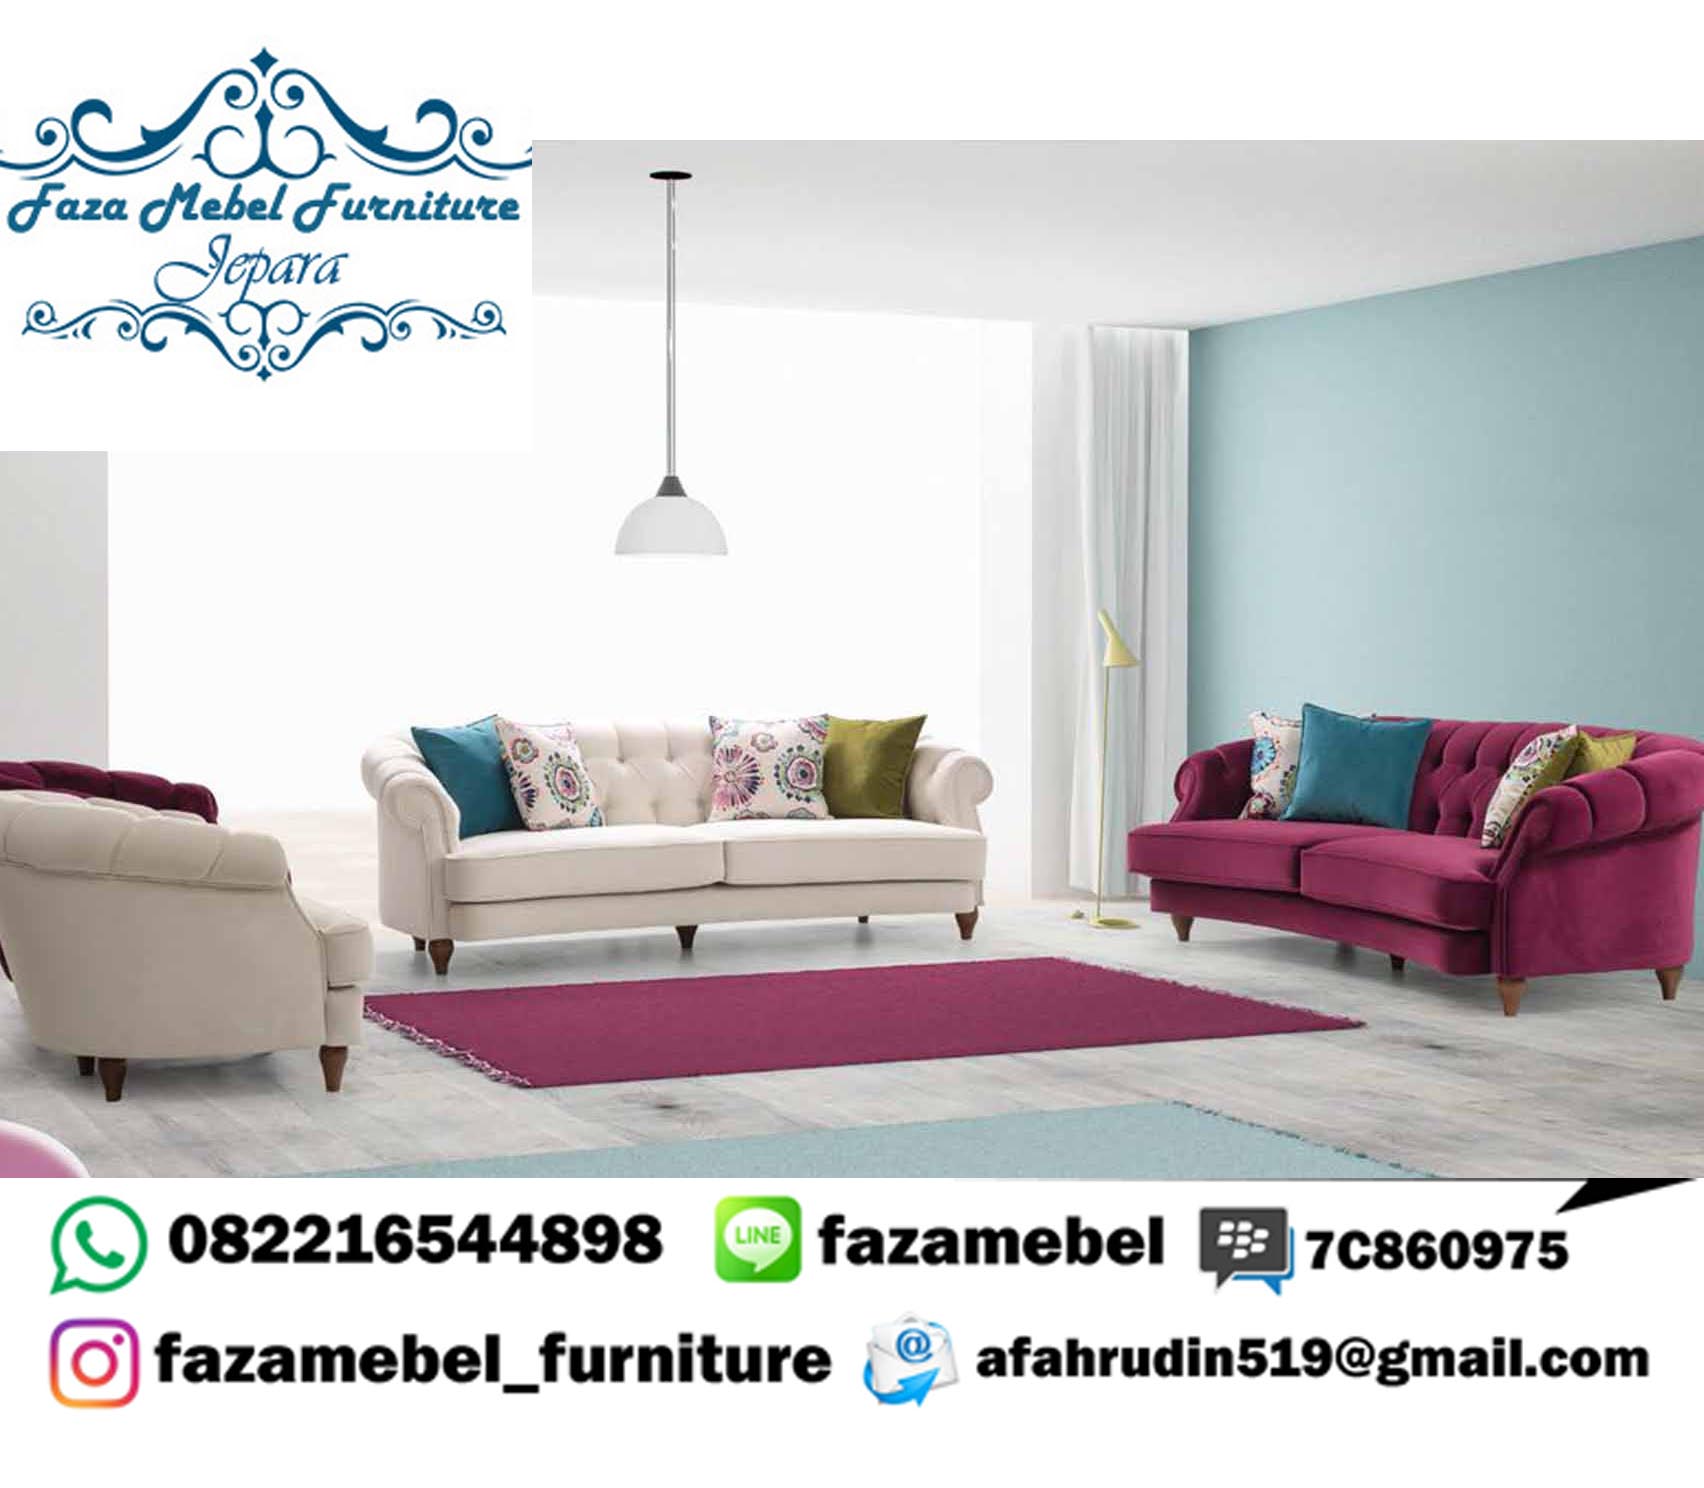 harga-sofa-tamu-minimalis-modern (1)